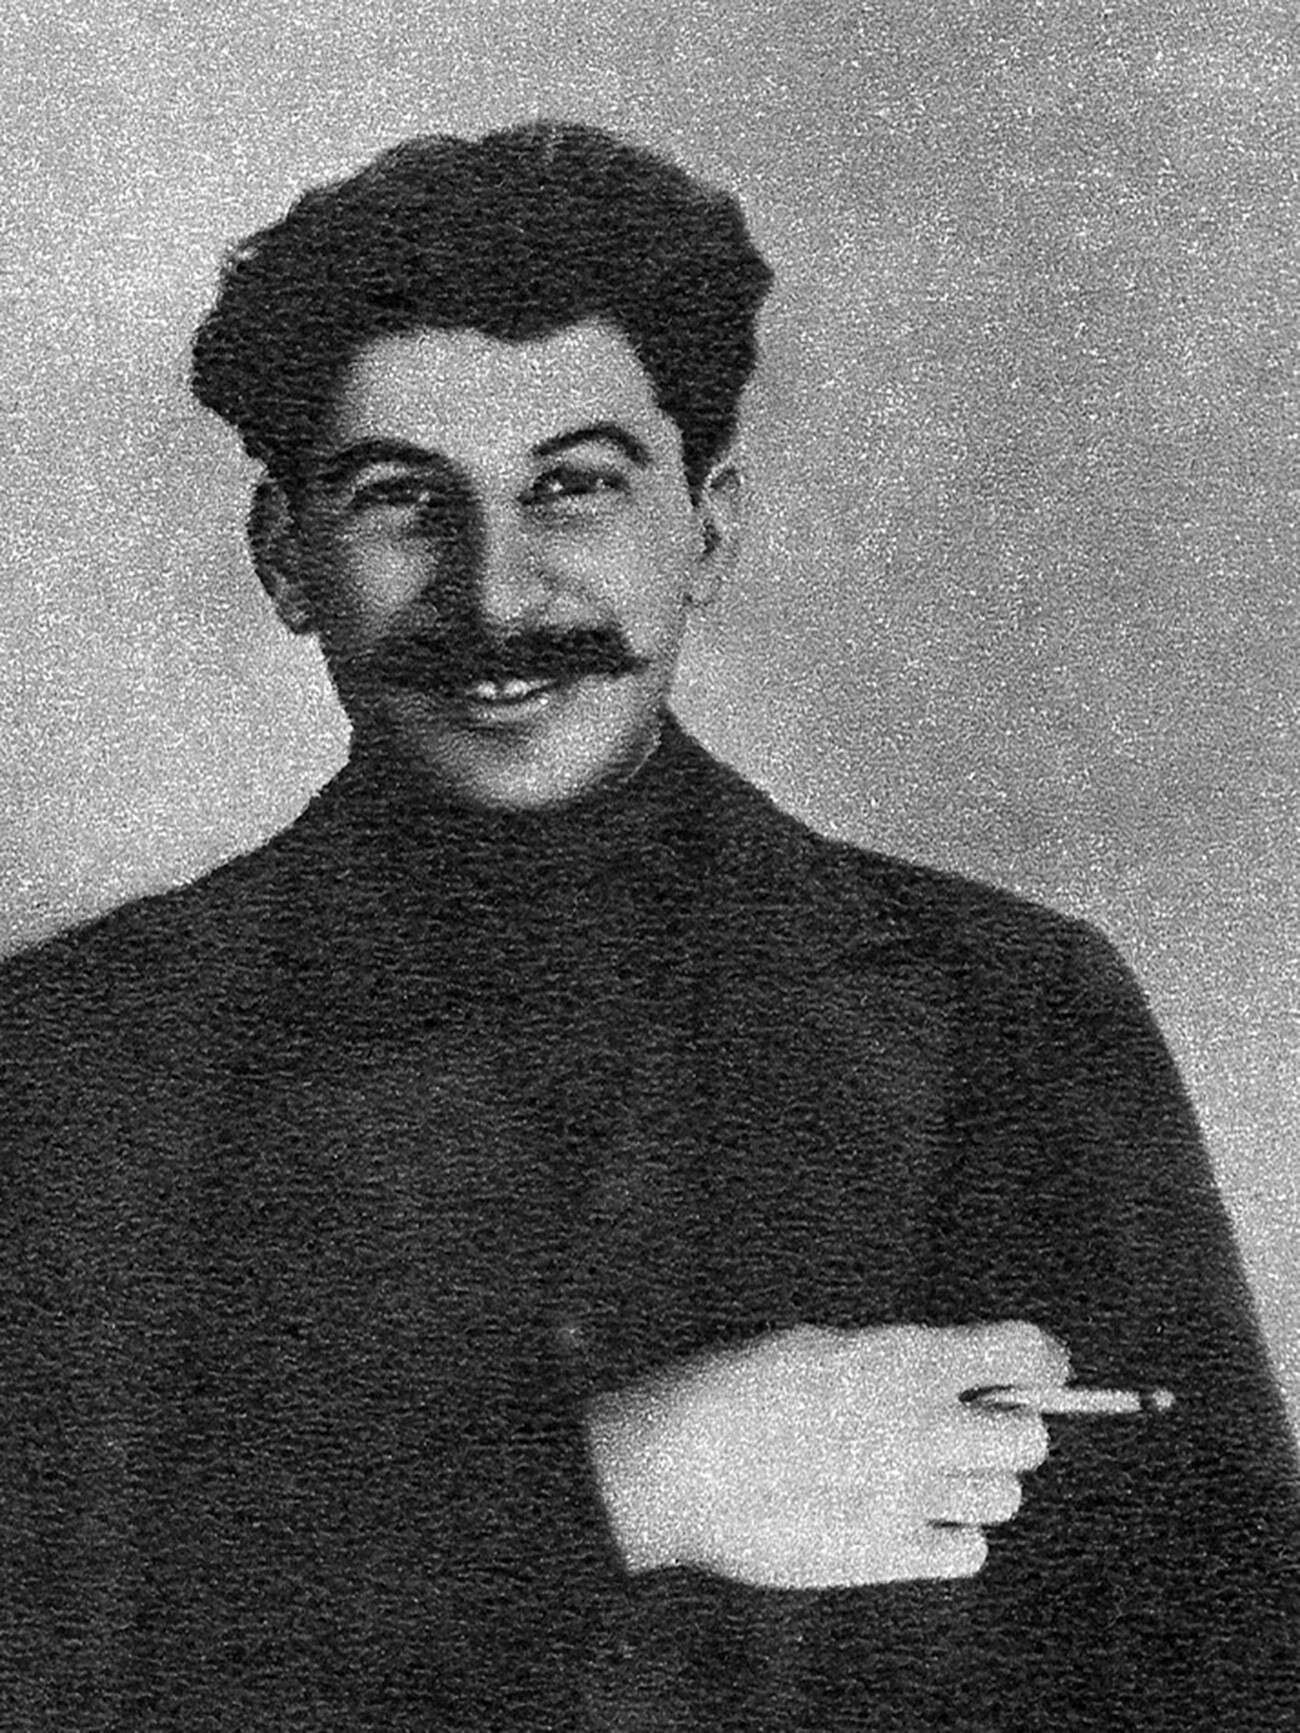 Stalin v izgnanstvu 1915